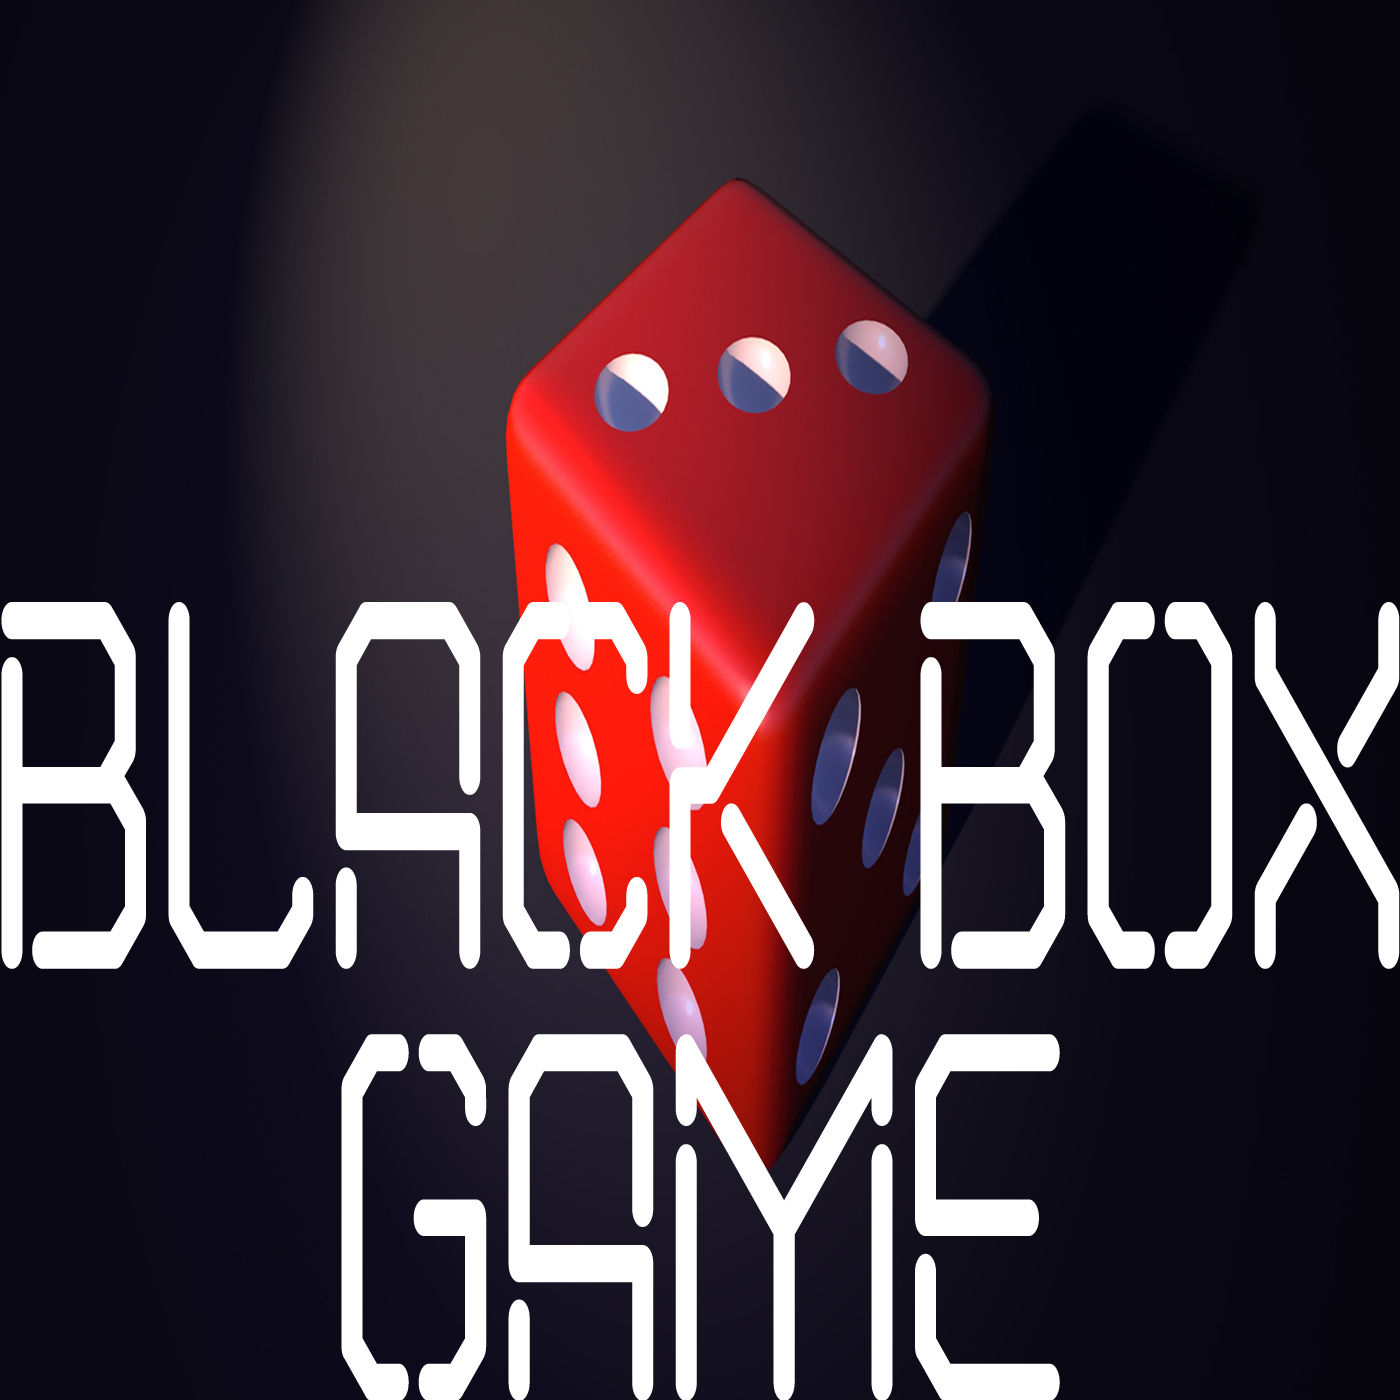 BLACK BOX - Game(신남, 비트, 즐거움, 흥겨움, 클럽, 흥함, 활기, 행복, 경쾌, 게임, 일렉)